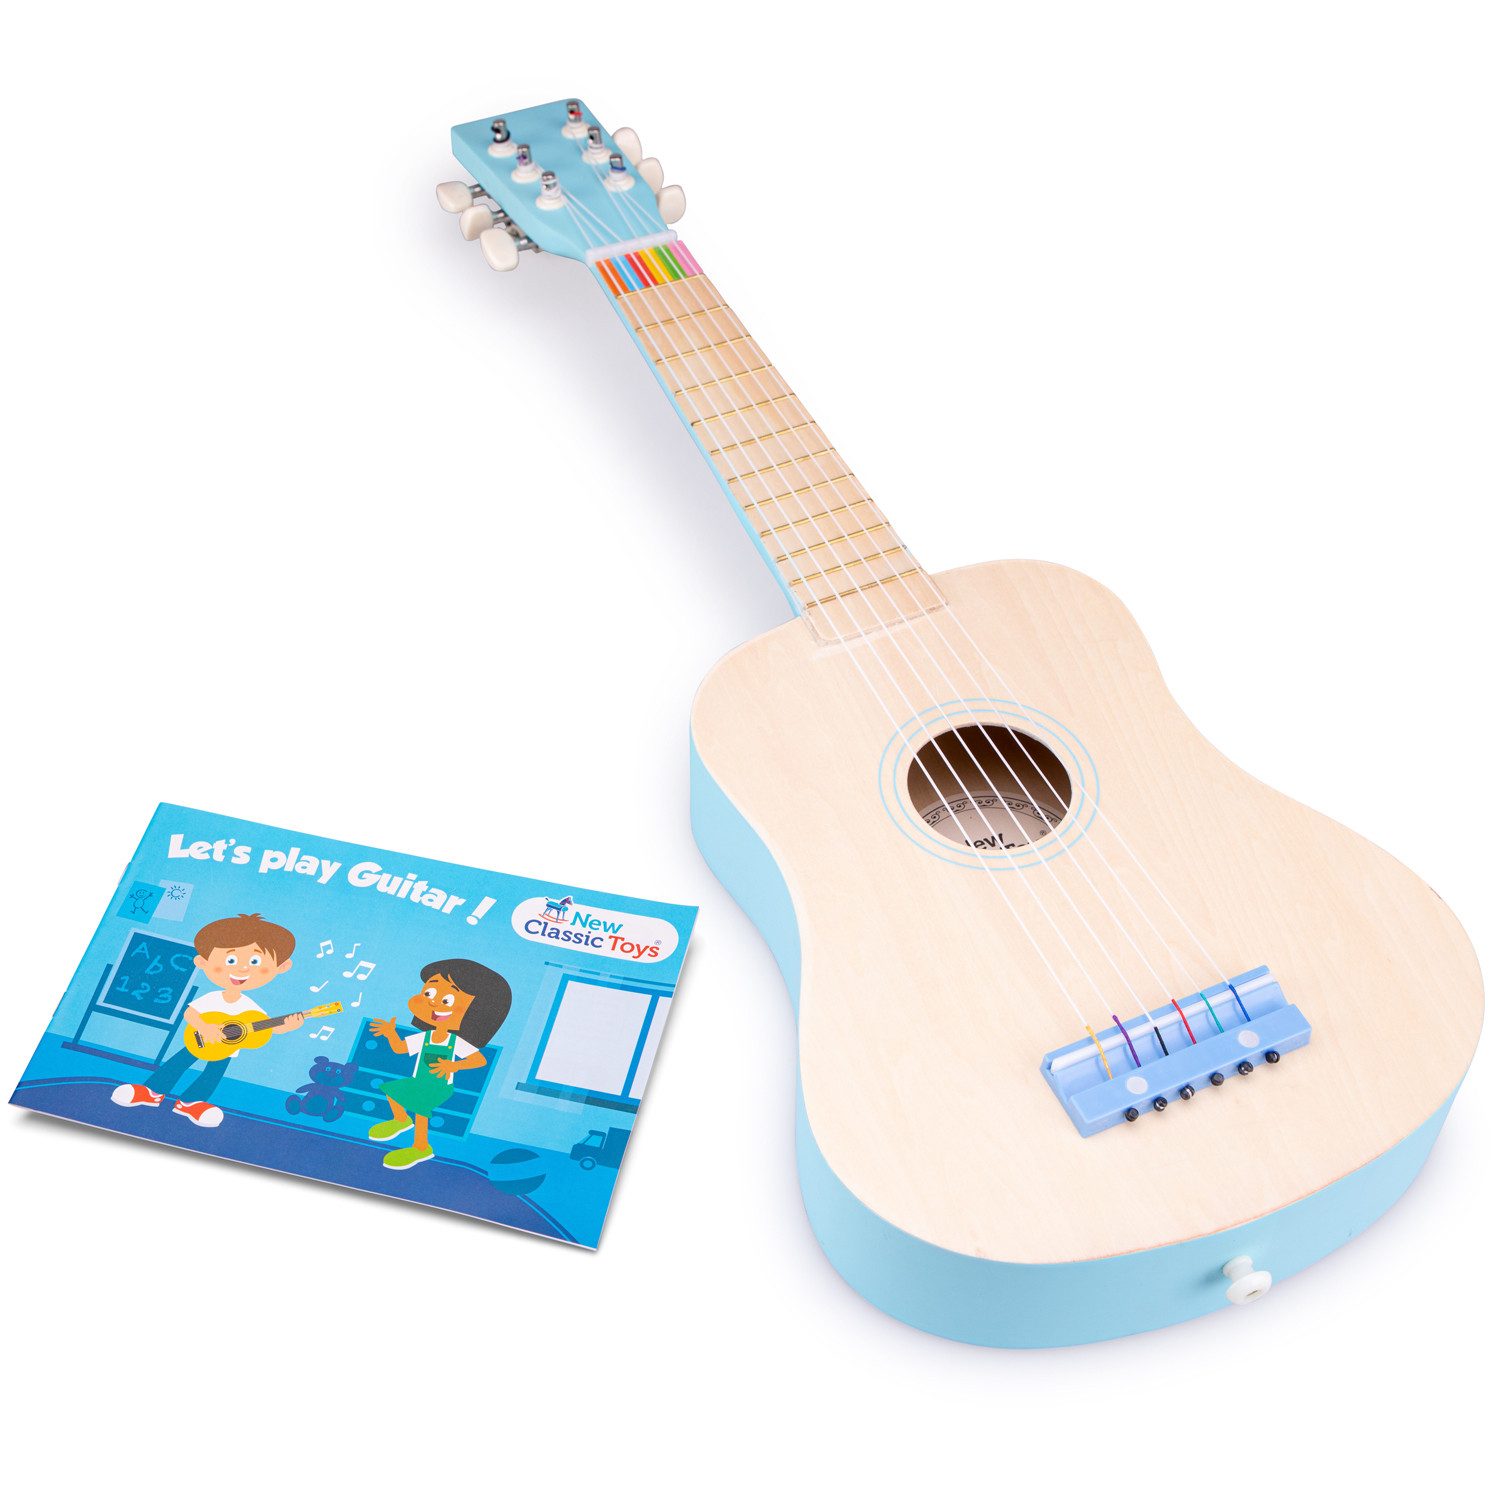 New Classic Toys® Spielzeug-Musikinstrument Gitarre - natur/blau Kindergitarre Kinder-Instrument Musikspielzeug